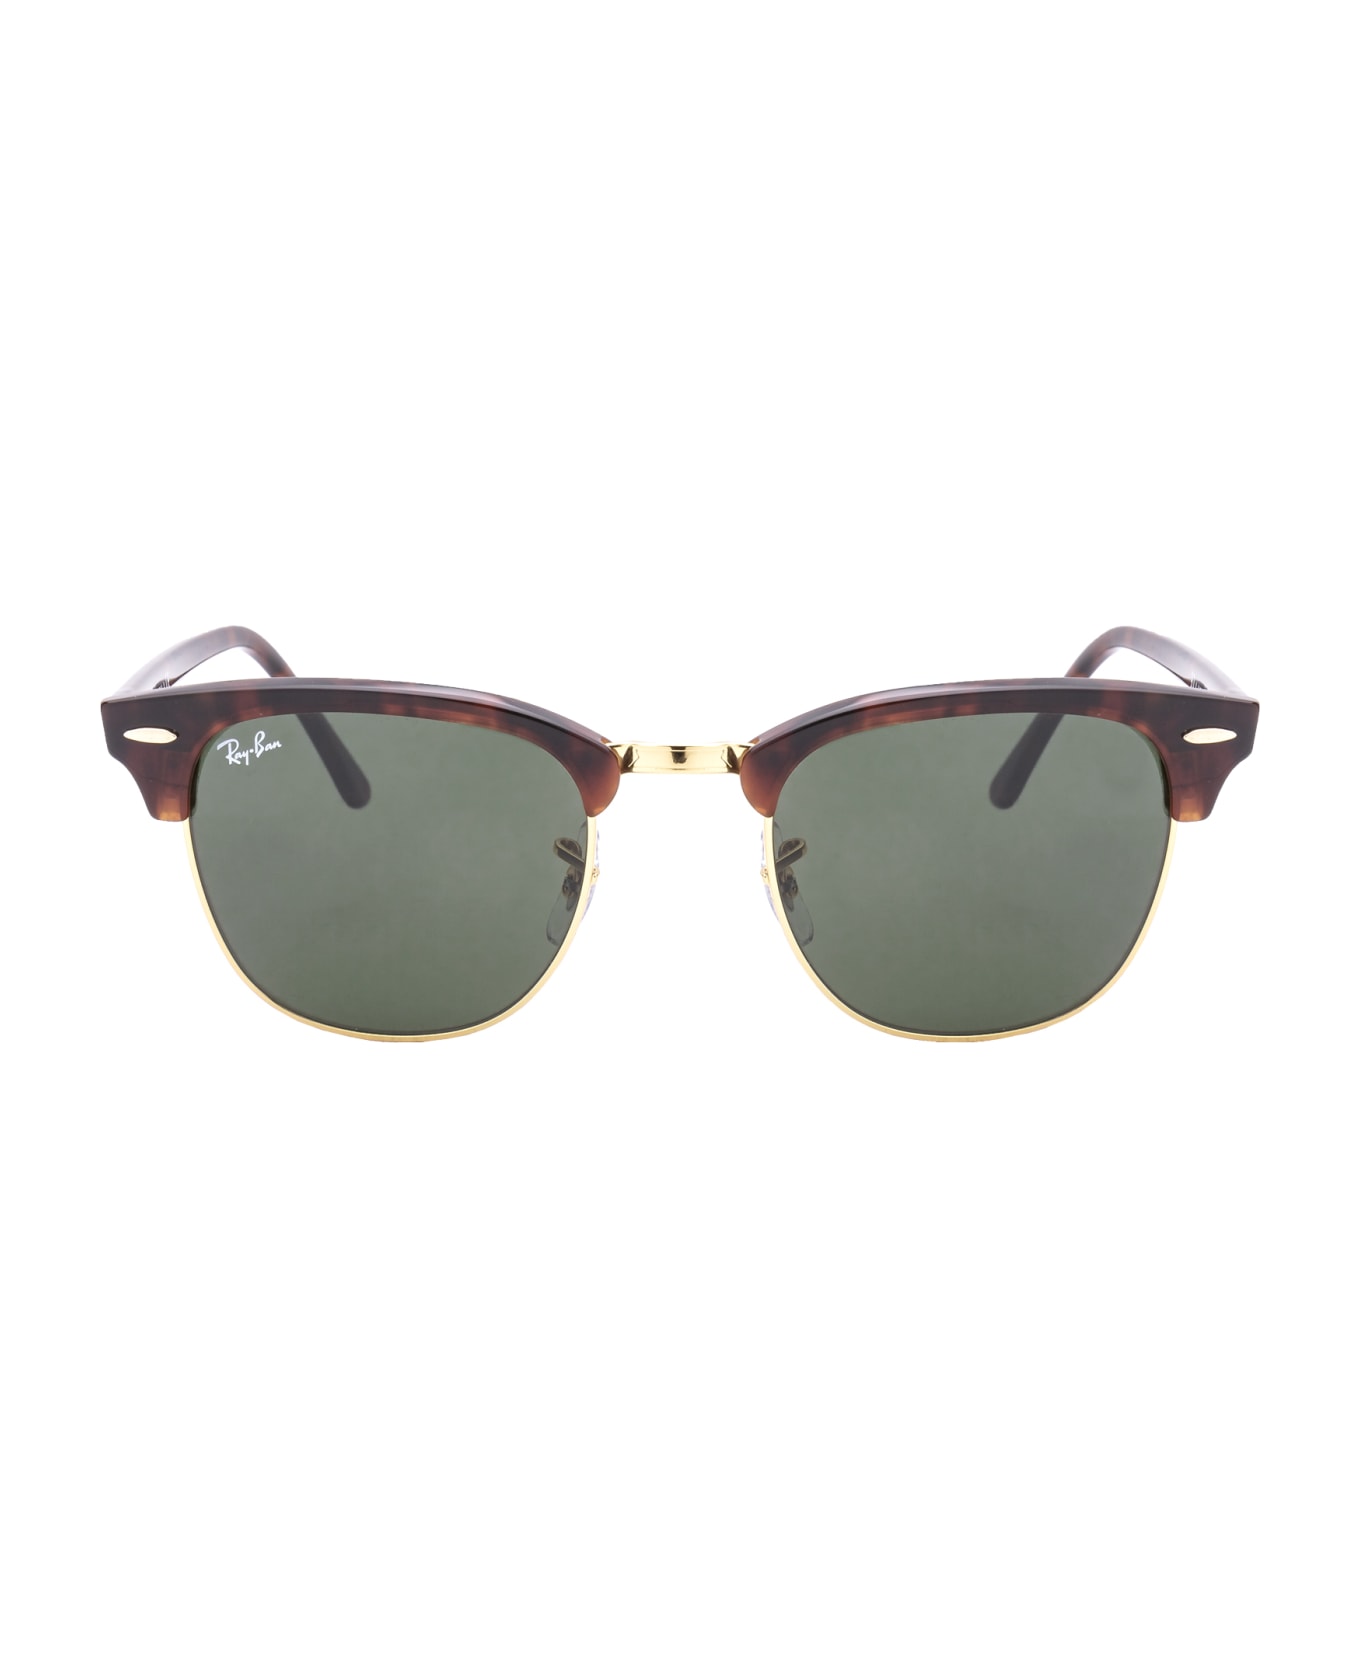 Ray-Ban Clubmaster Sunglasses - W0366 Tortoise On Gold サングラス